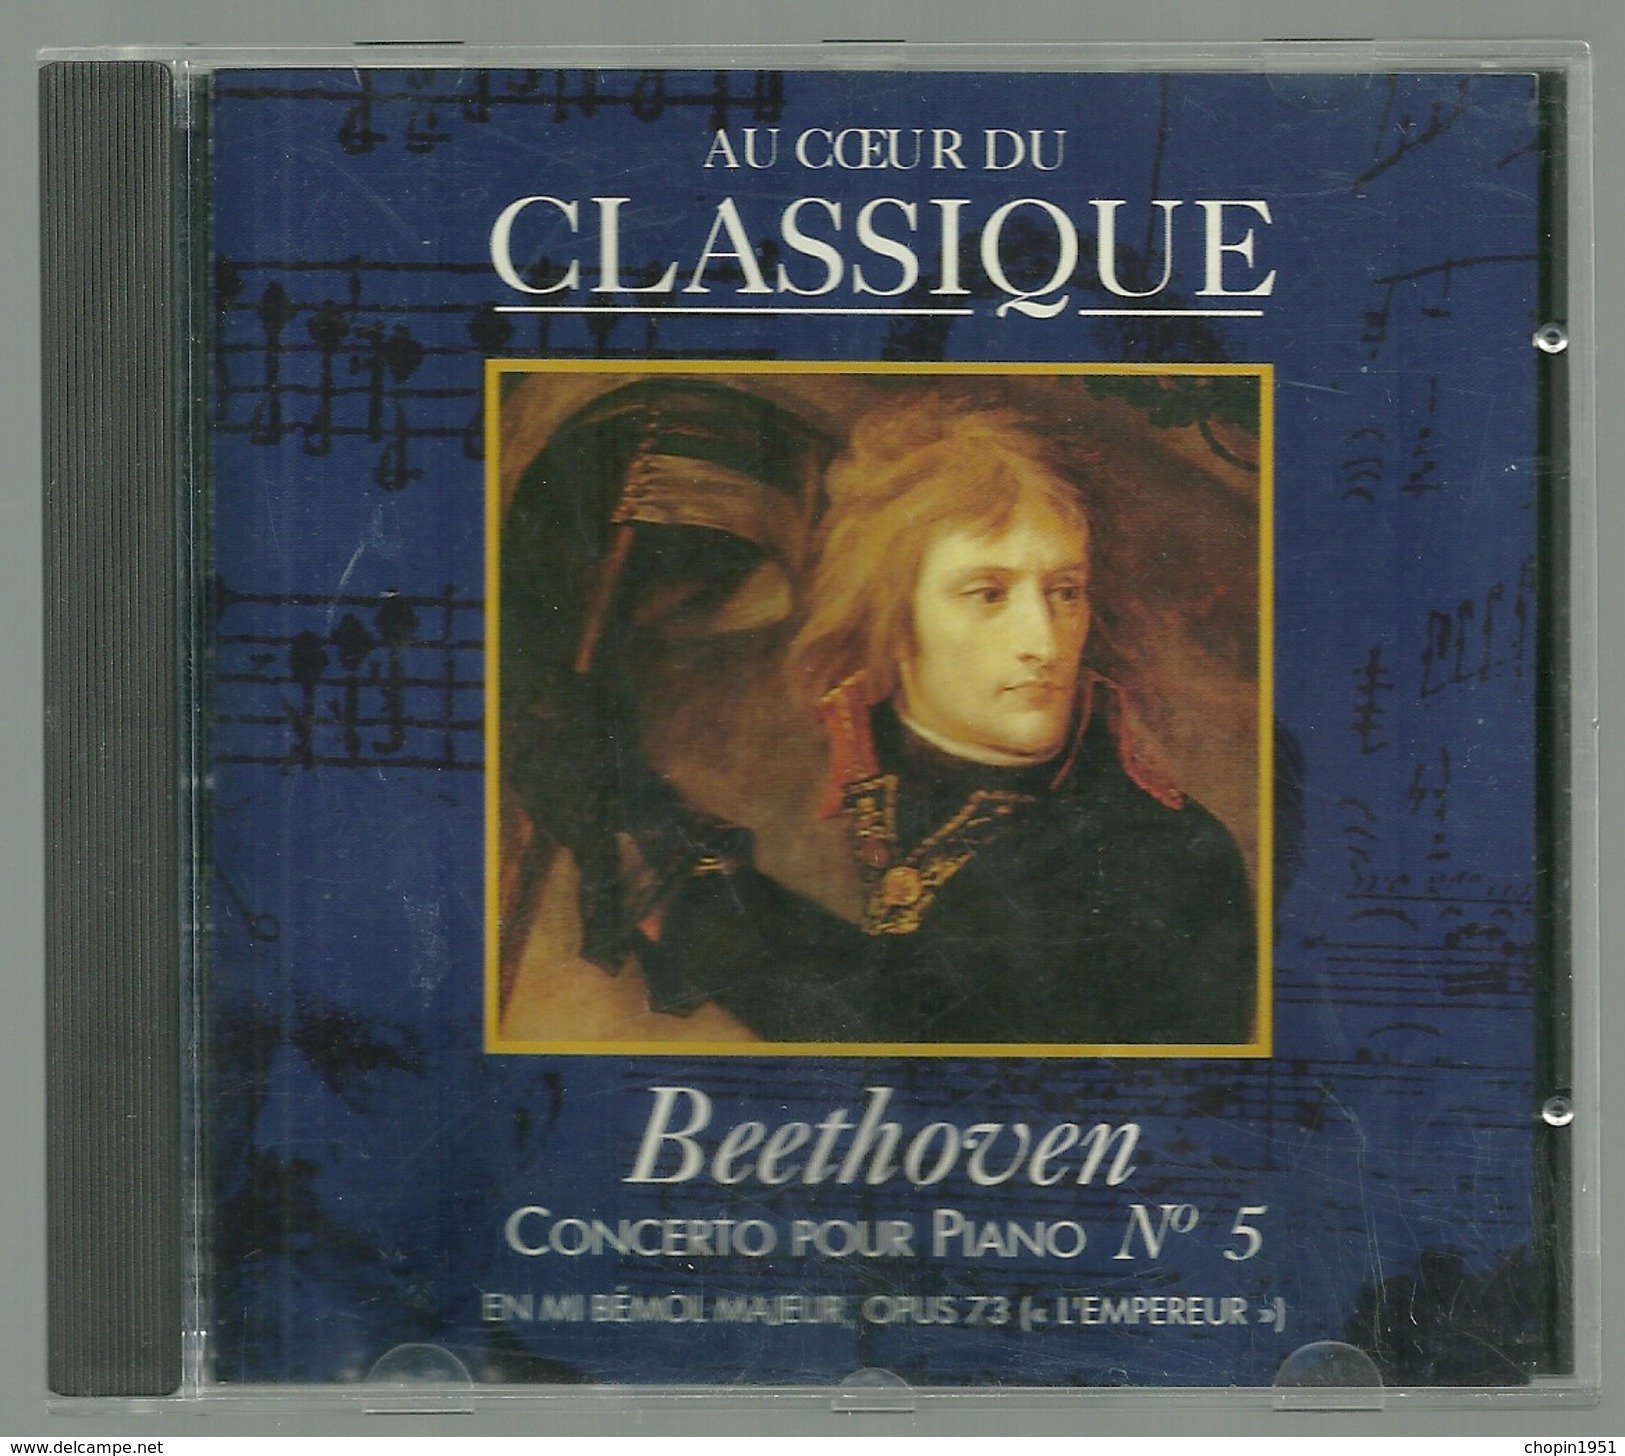 CD PIANO - BEETHOVEN : CONCERTO POUR PIANO N° 5 - ALFRED BRENDEL, Piano - Klassik